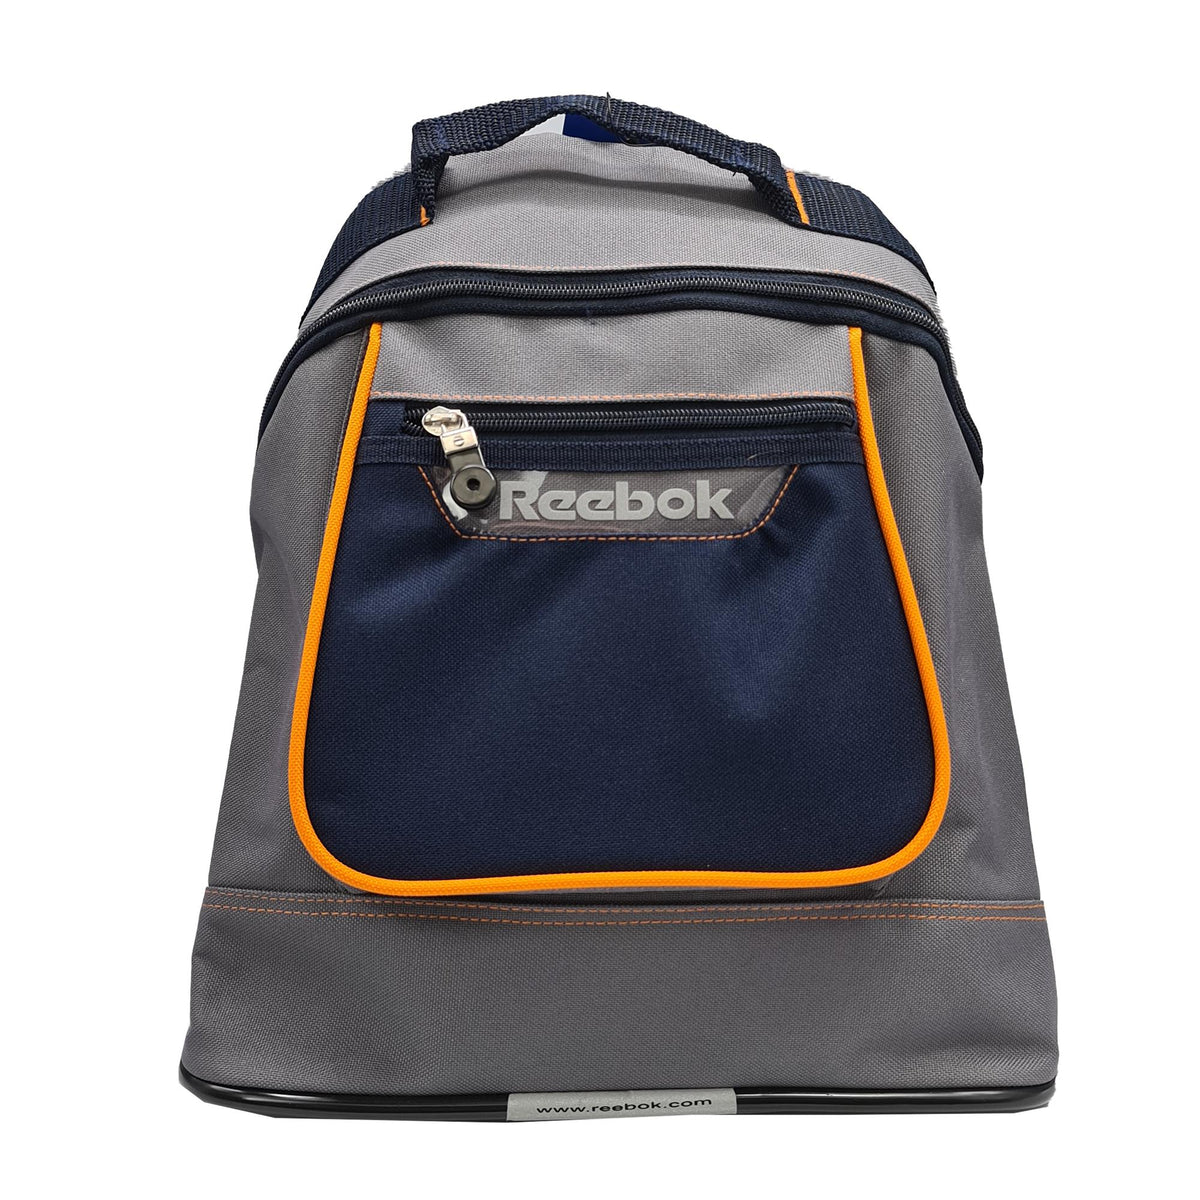 Reebok Unisex Contrast Classic Mini Backpack - Grey/Black